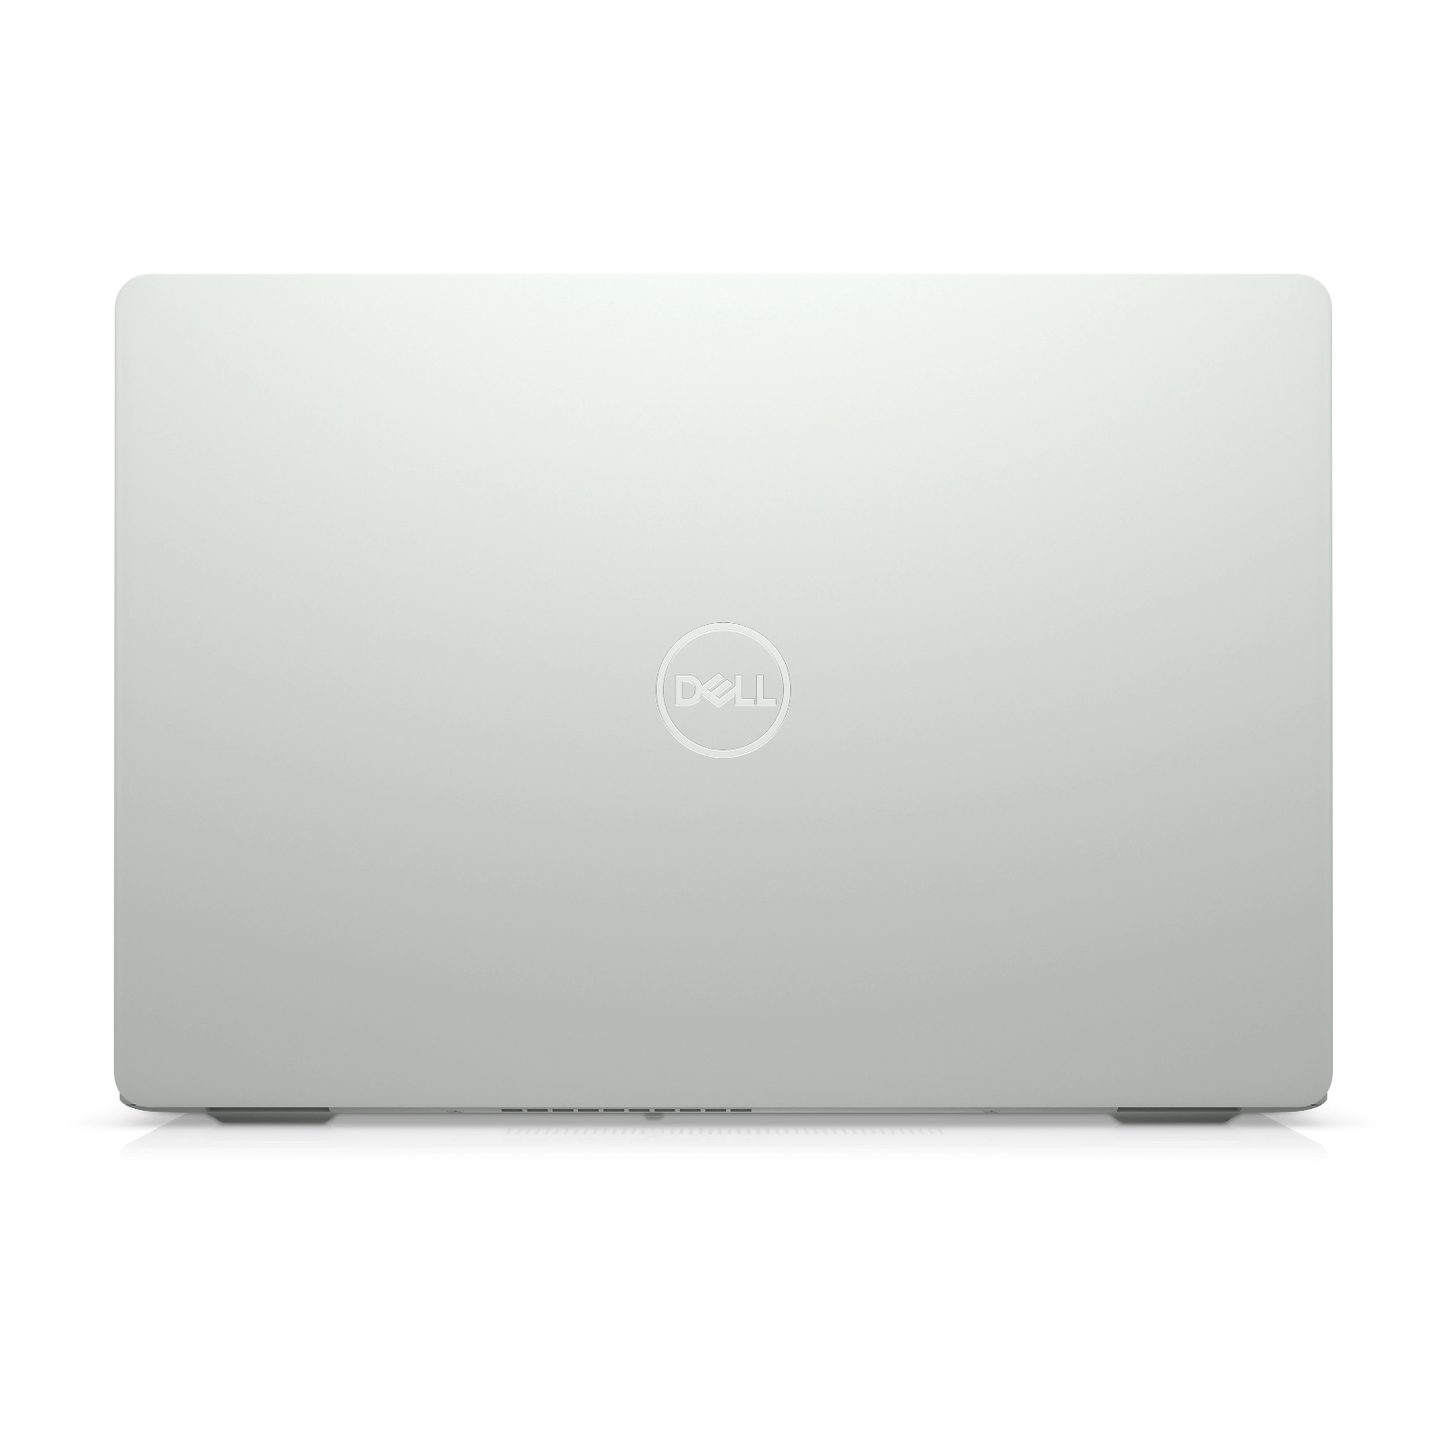 Dell Inspiron 3501 Silver Core i5-1135G7 VGA Iris Xe Laptop Offers (New OB)